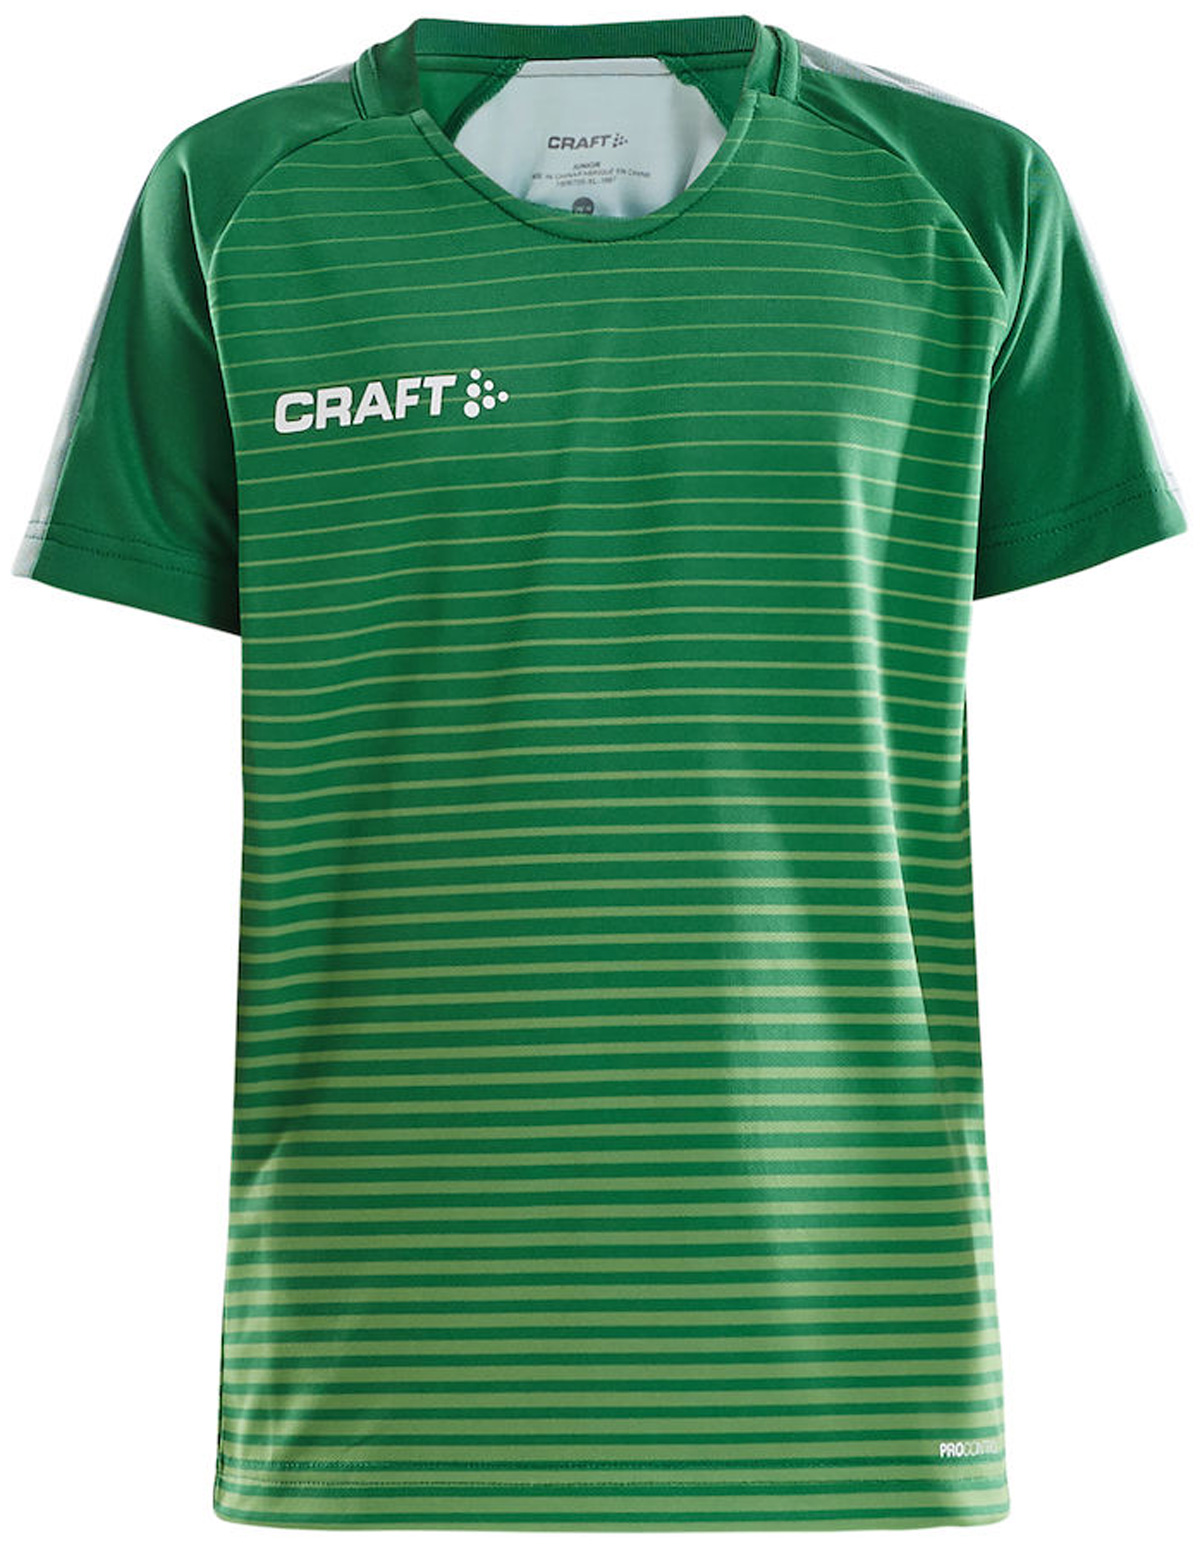 team green/ craft